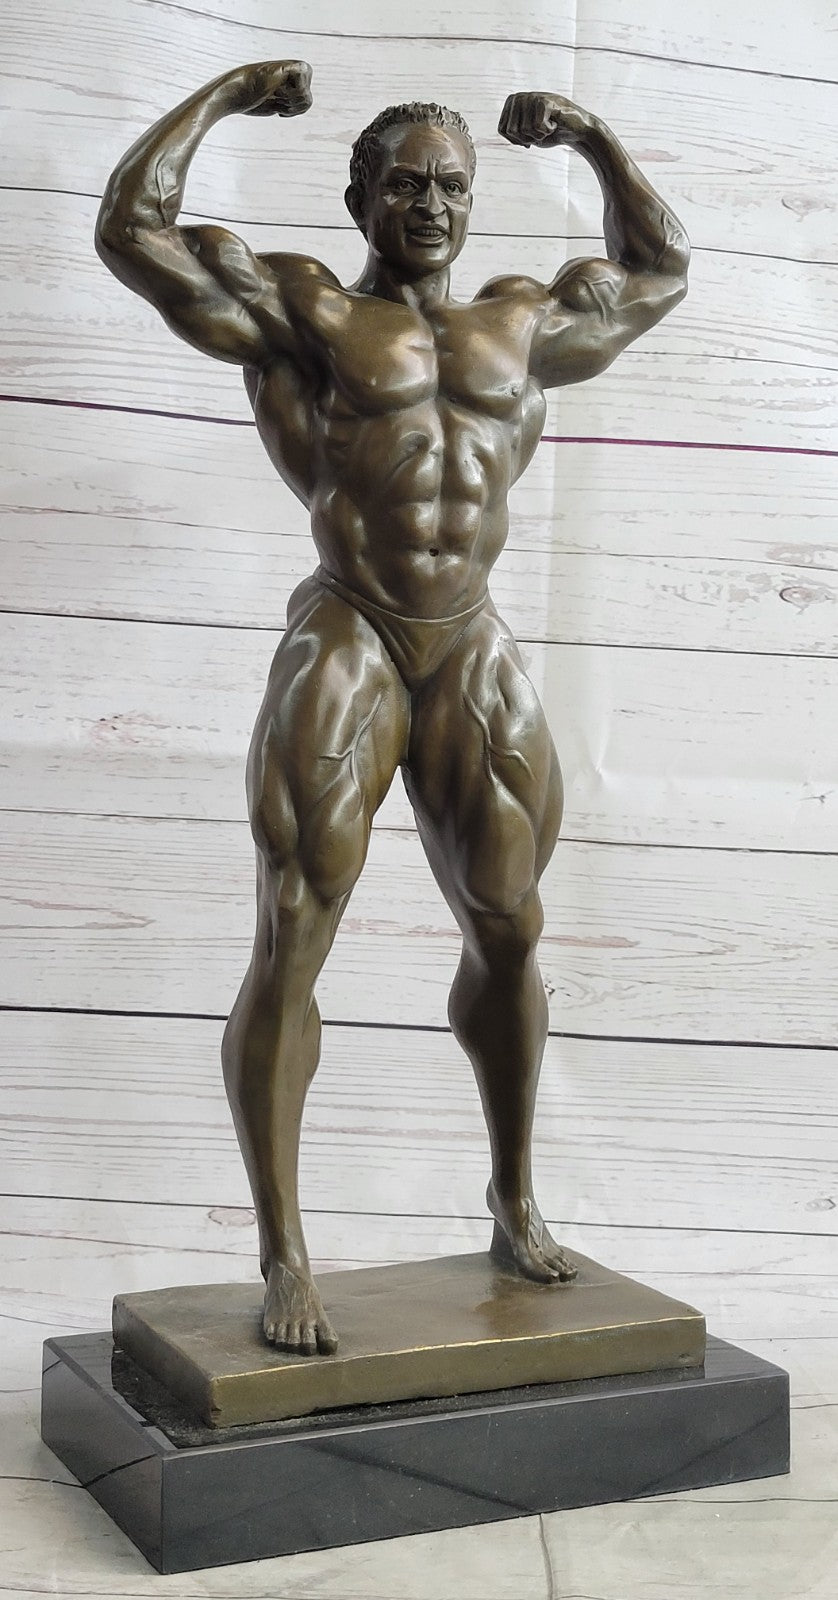 Handcrafted bronze sculpture SALE Decor Home Man Muscle Large Deco Art Original